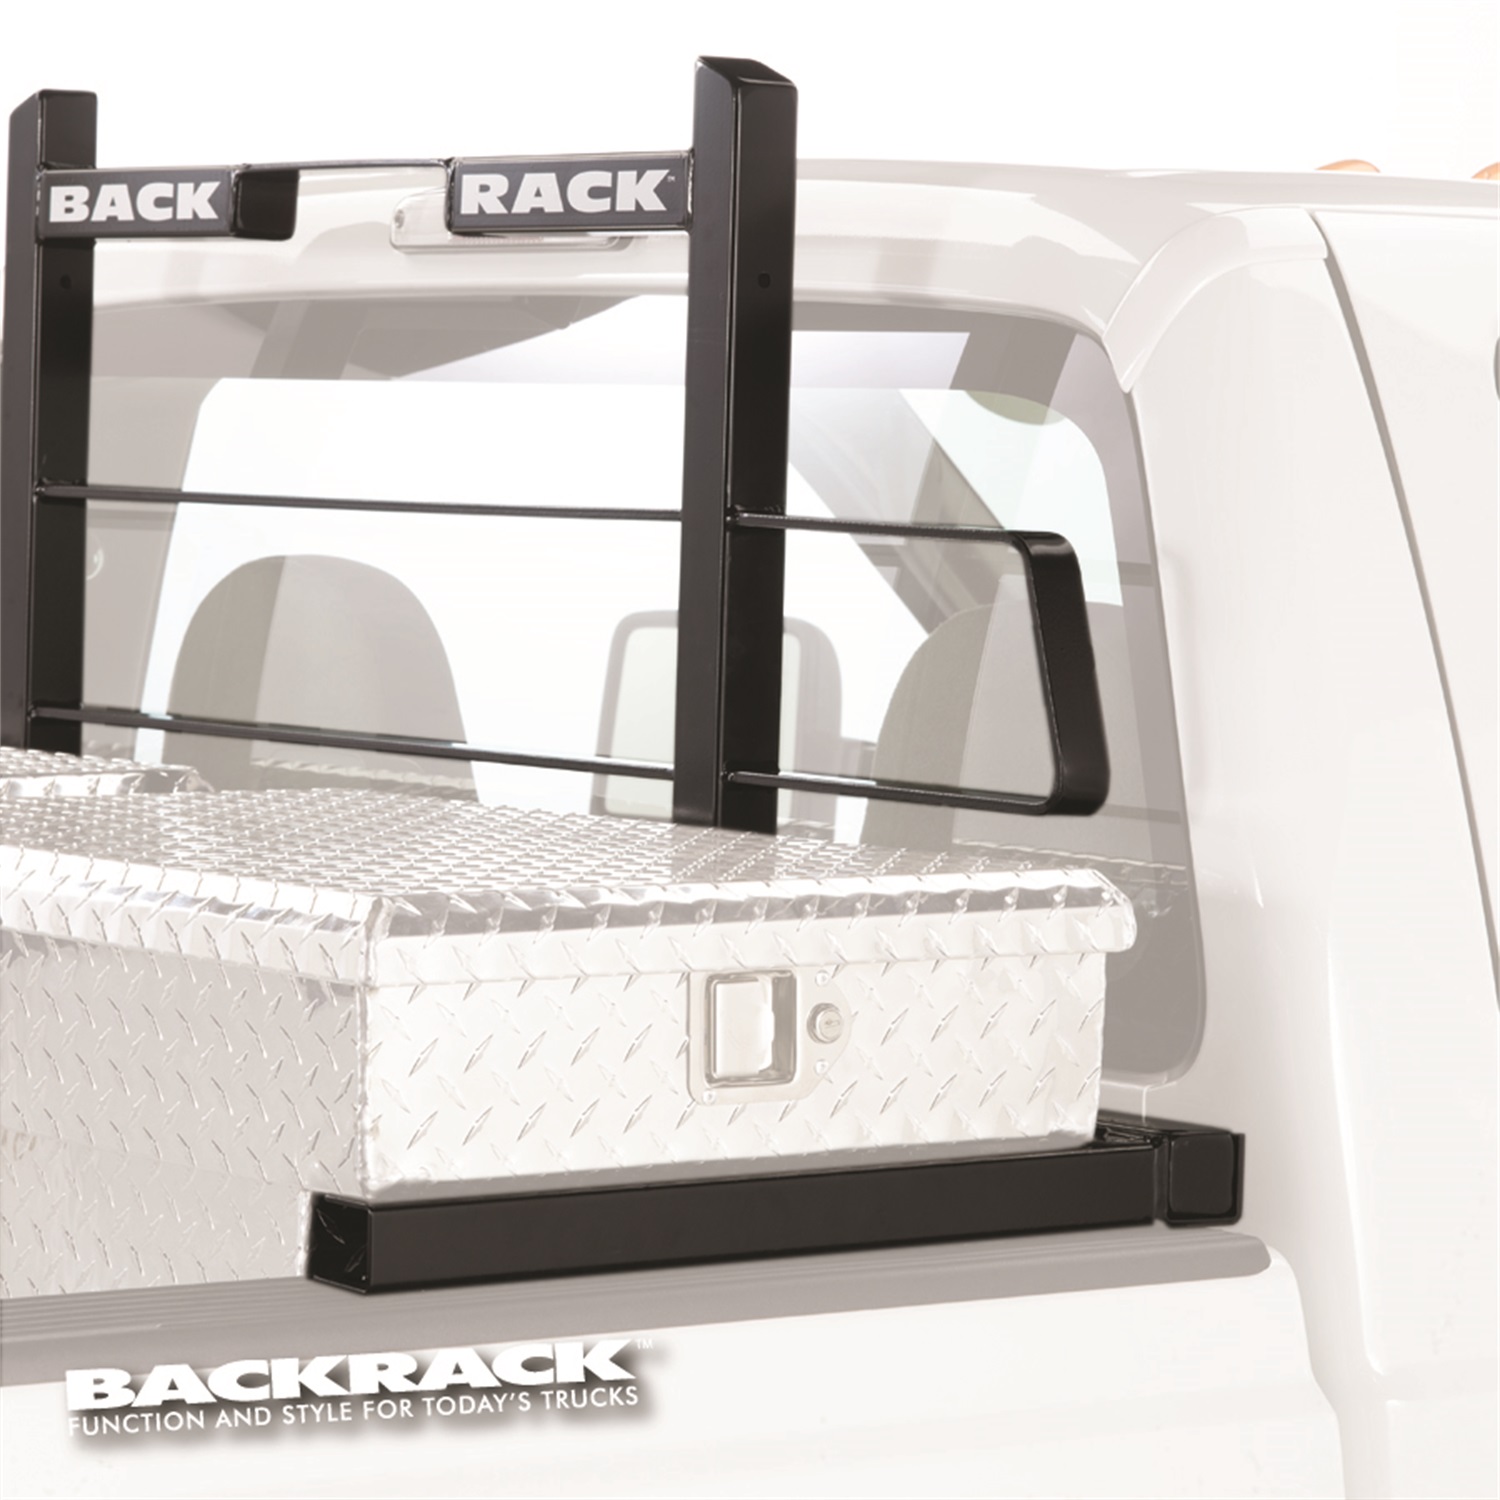 Backrack Backrack 10506TB Original Backrack Kit Fits 75-96 F-100 F-150 F-250 F-350